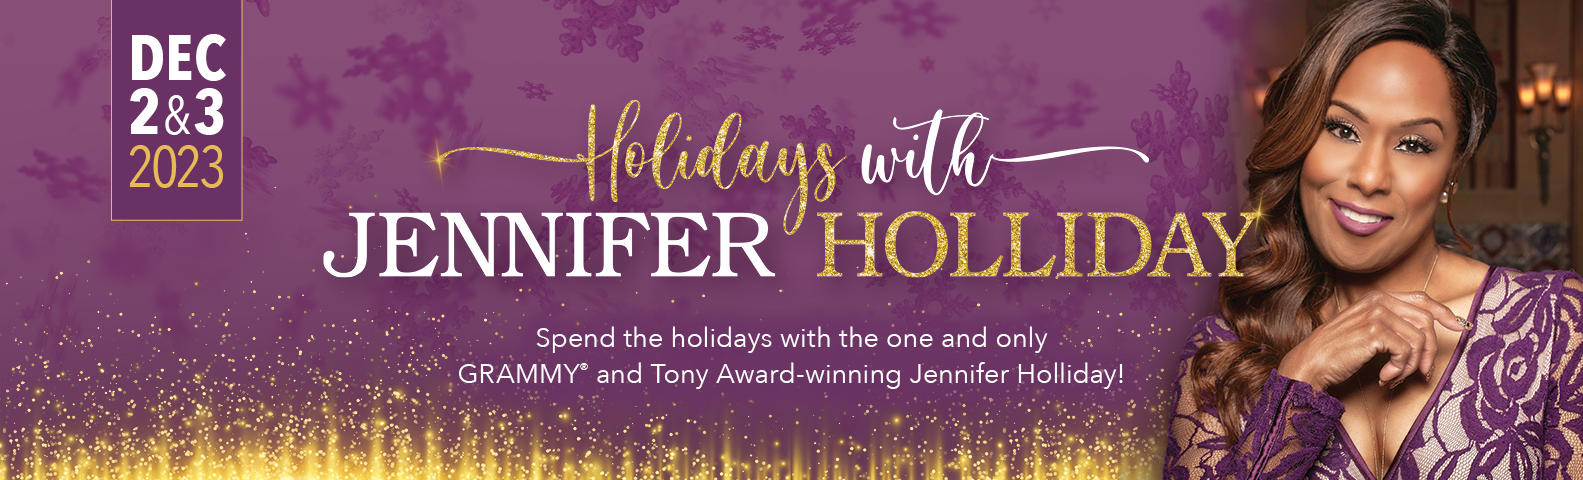 Holidays with Jennifer Holliday, Ventura, California, United States